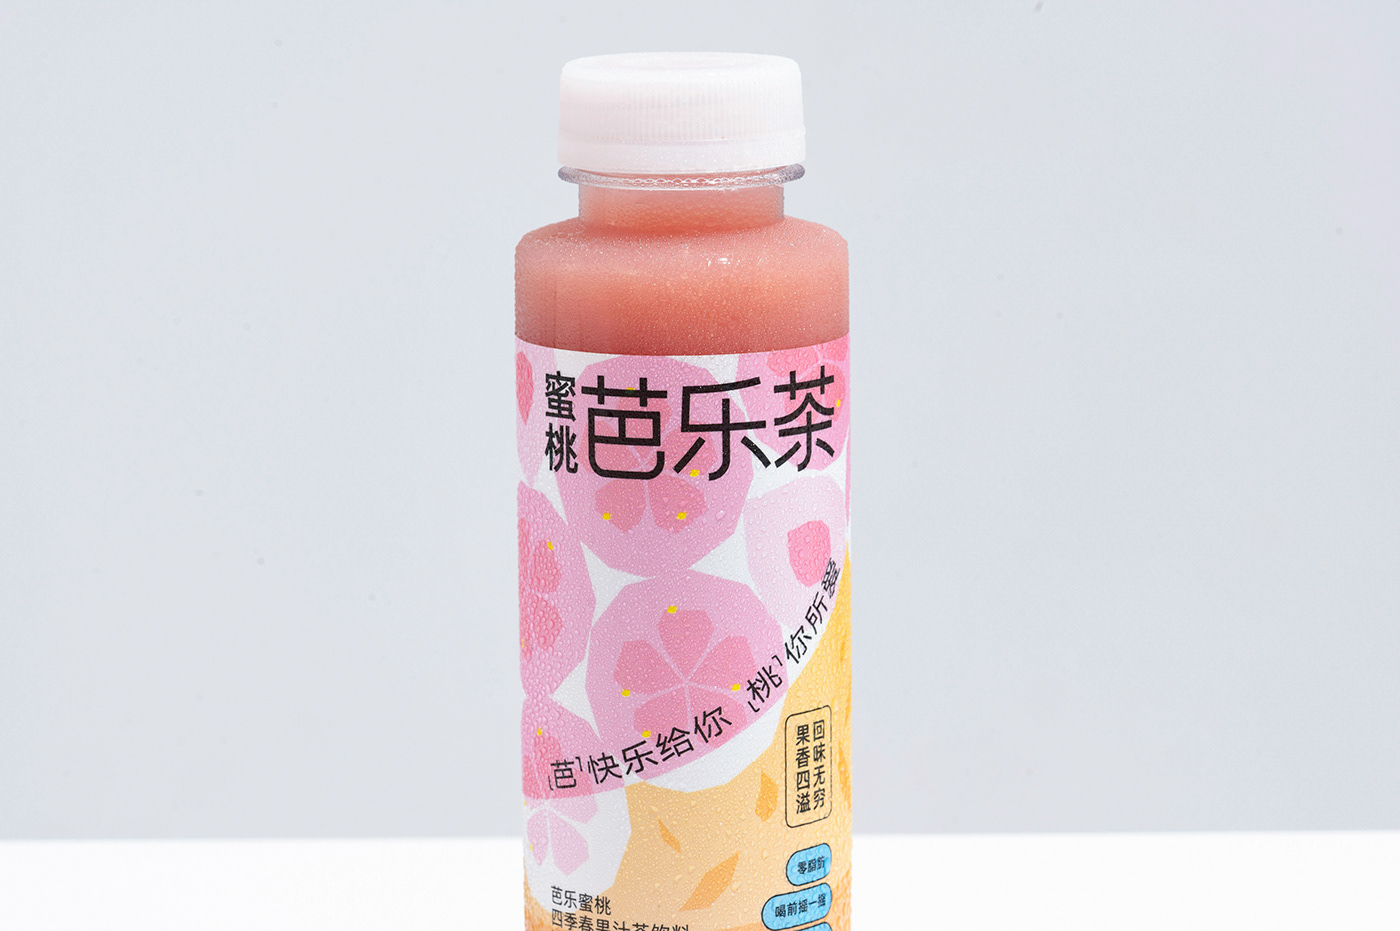 beverage bottle drink juice Label package Packaging packaging design product tea